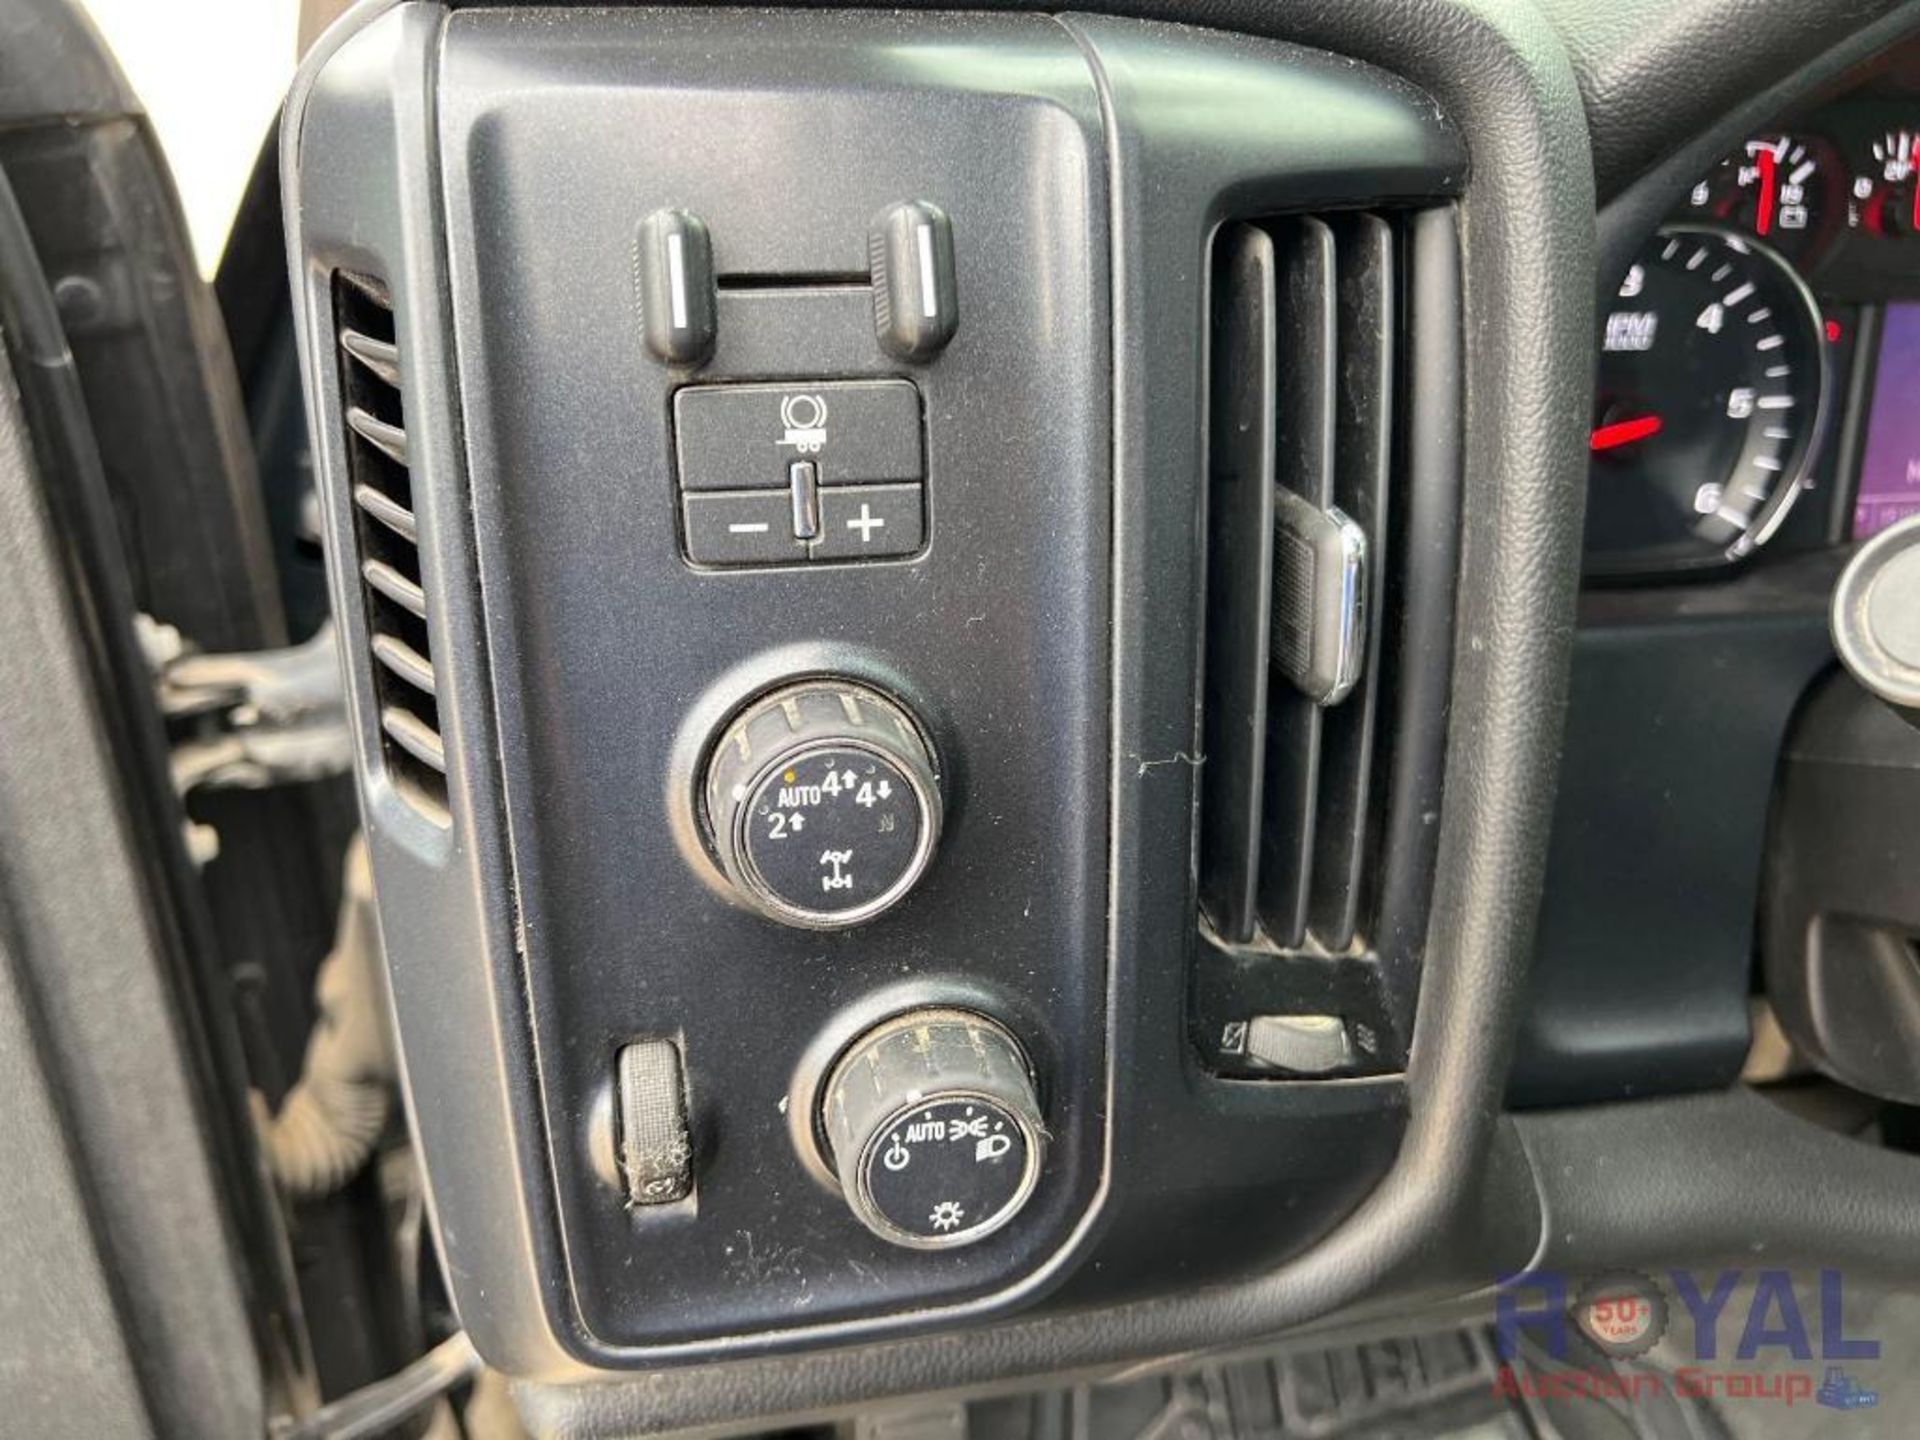 2018 Chevrolet Silverado 4x4 Crew Cab Pickup Truck - Image 20 of 51